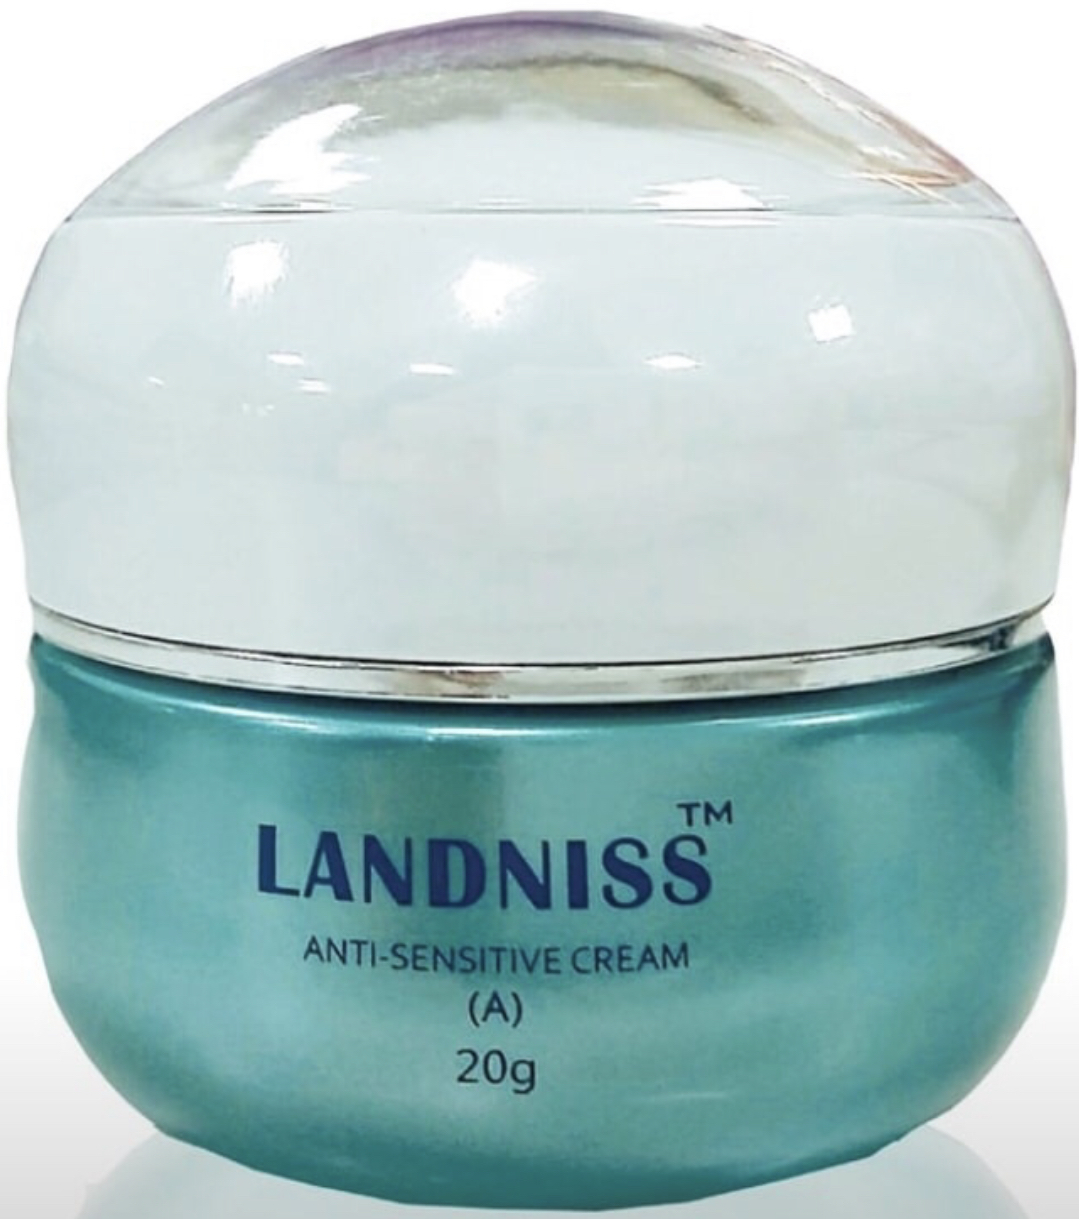 Landniss Anti-Sensitive Cream, 20g